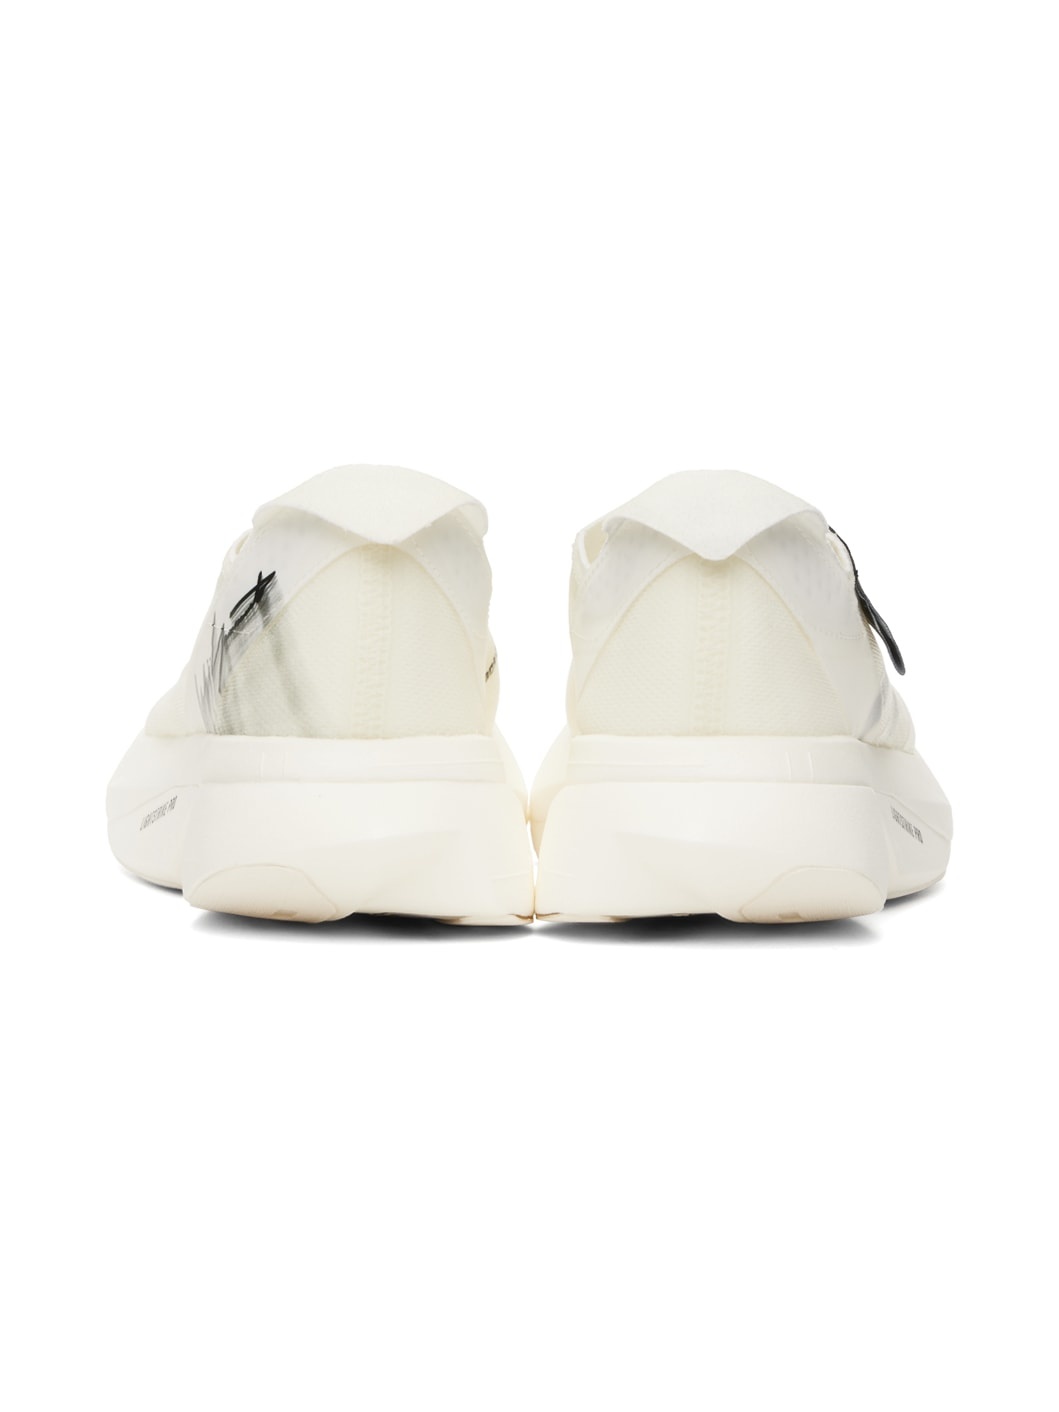 Off-White Adios Pro 3.0 Sneakers - 2